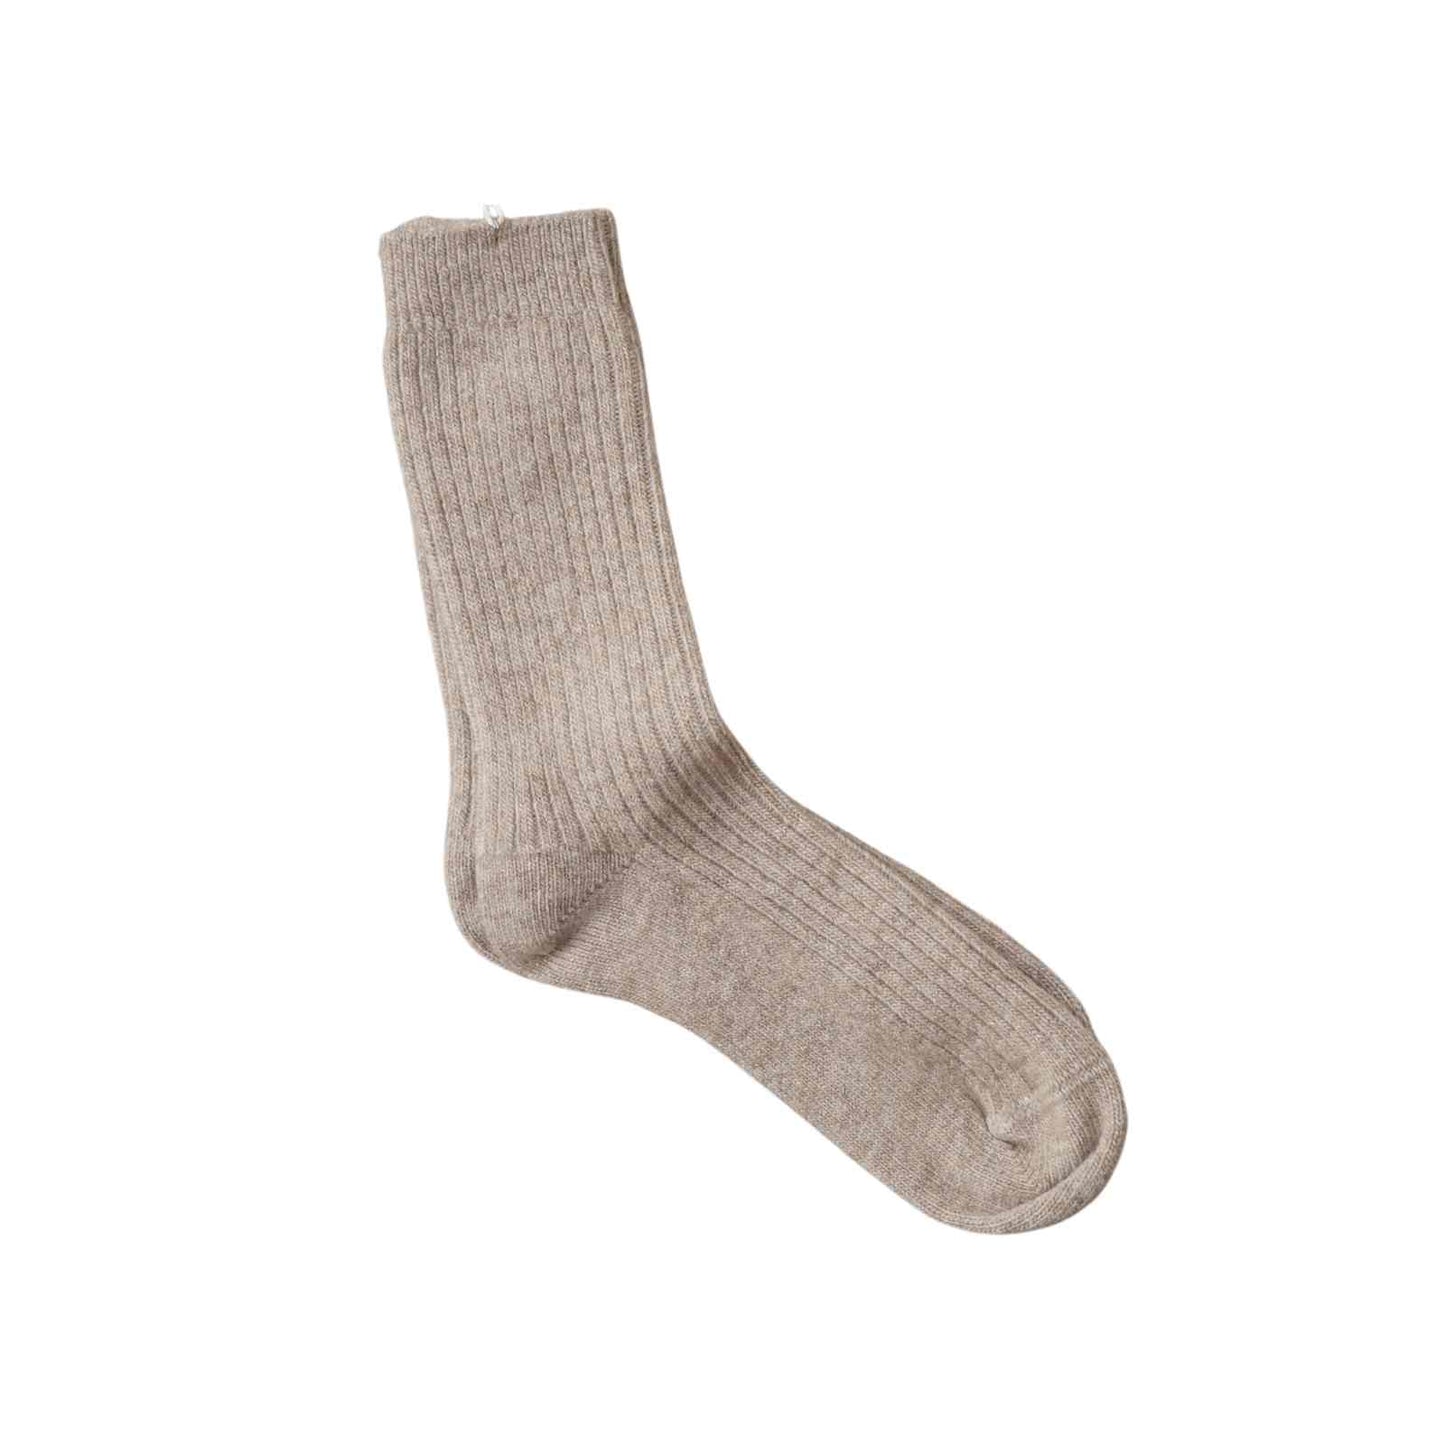 Gorridsen uld sokker i camel model Magnolia